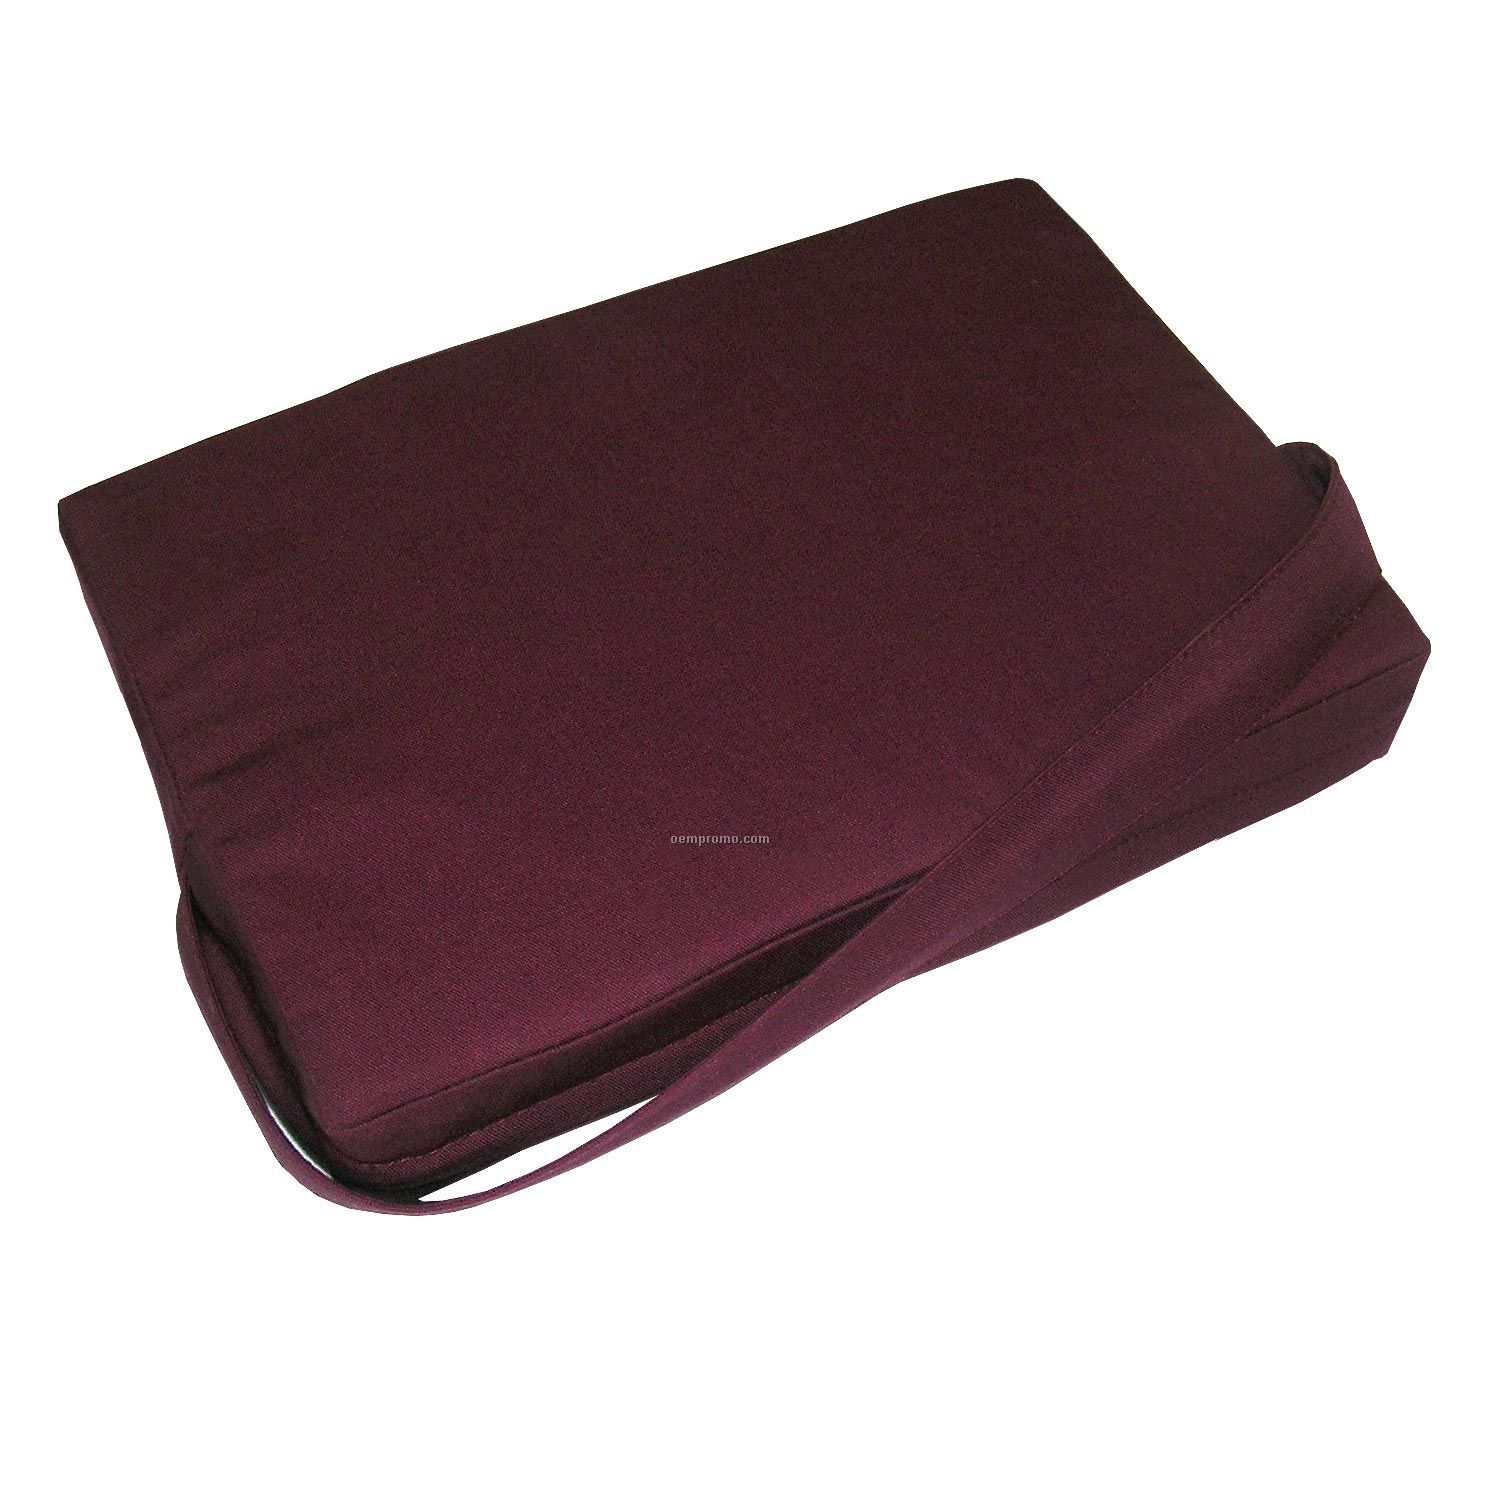 The Pocket-portable Seat Cushion